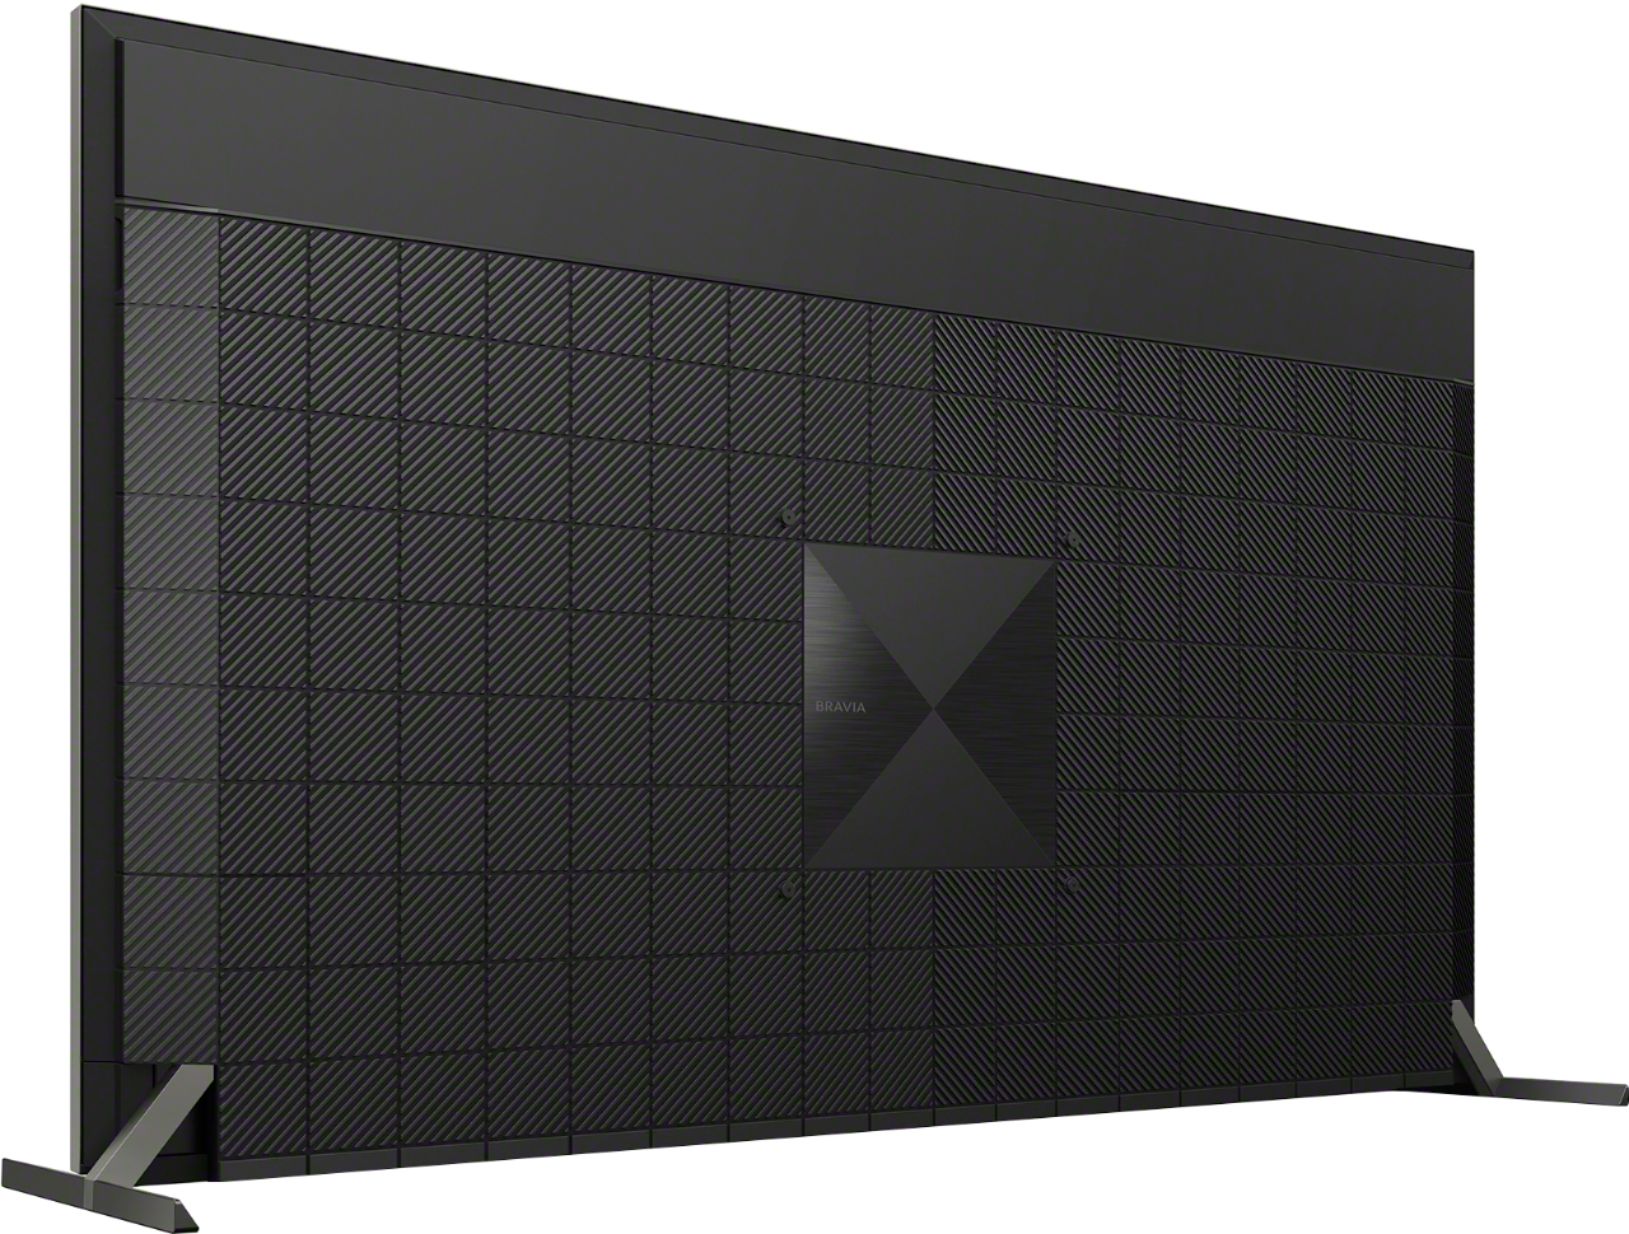 Angle View: Sony - 75" class BRAVIA XR X95J 4K UHD Smart Google TV